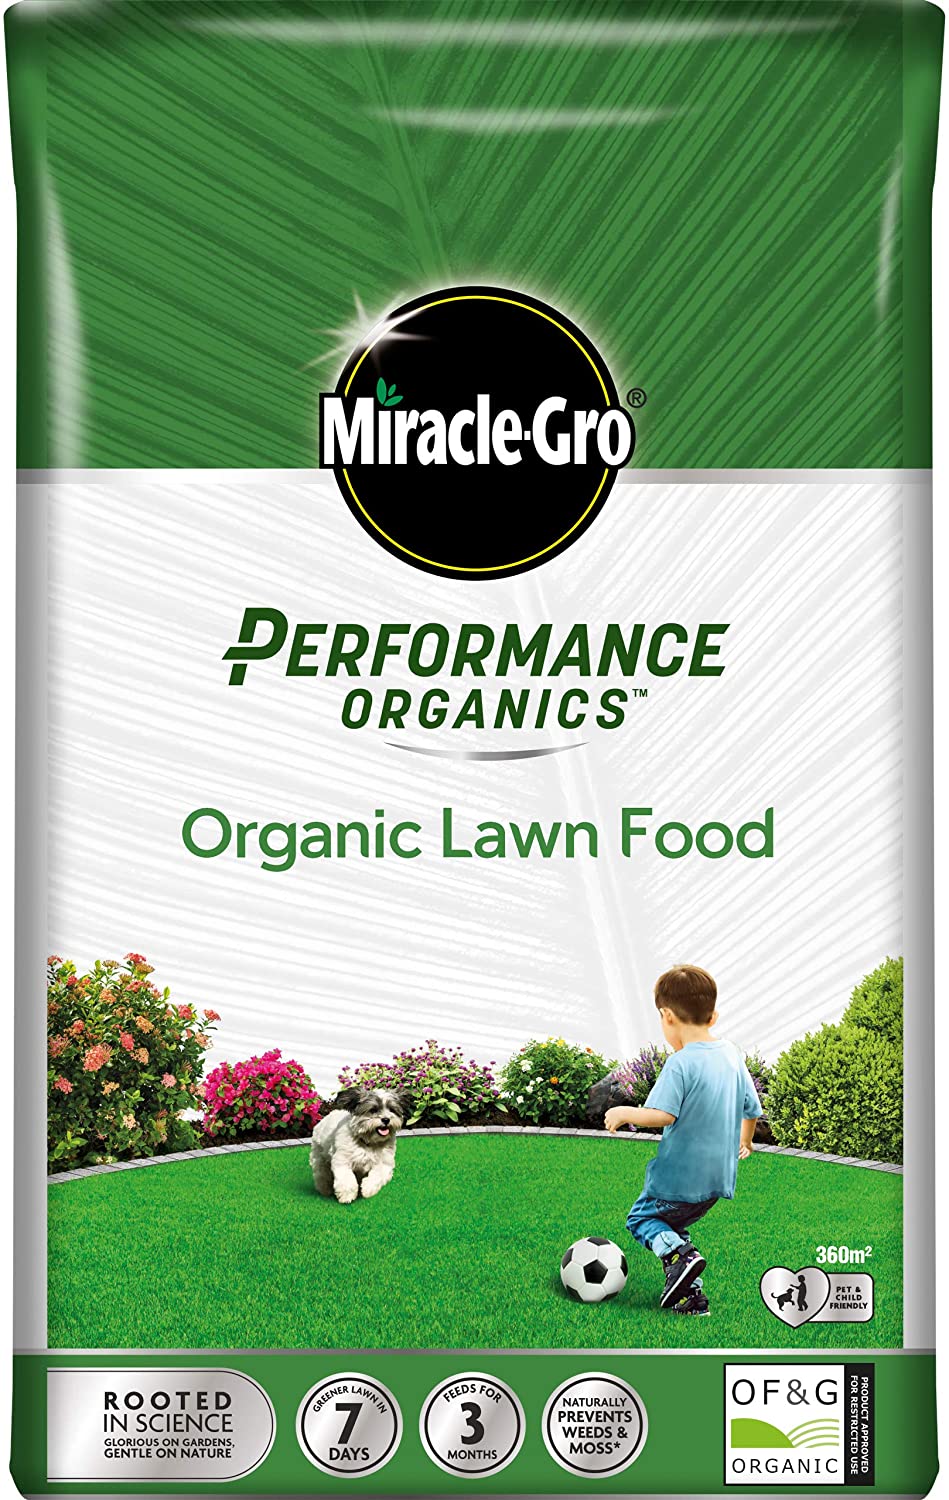 Miracle-Gro-Performance-Organics-Organic-Lawn-Food-360m2-Coverage